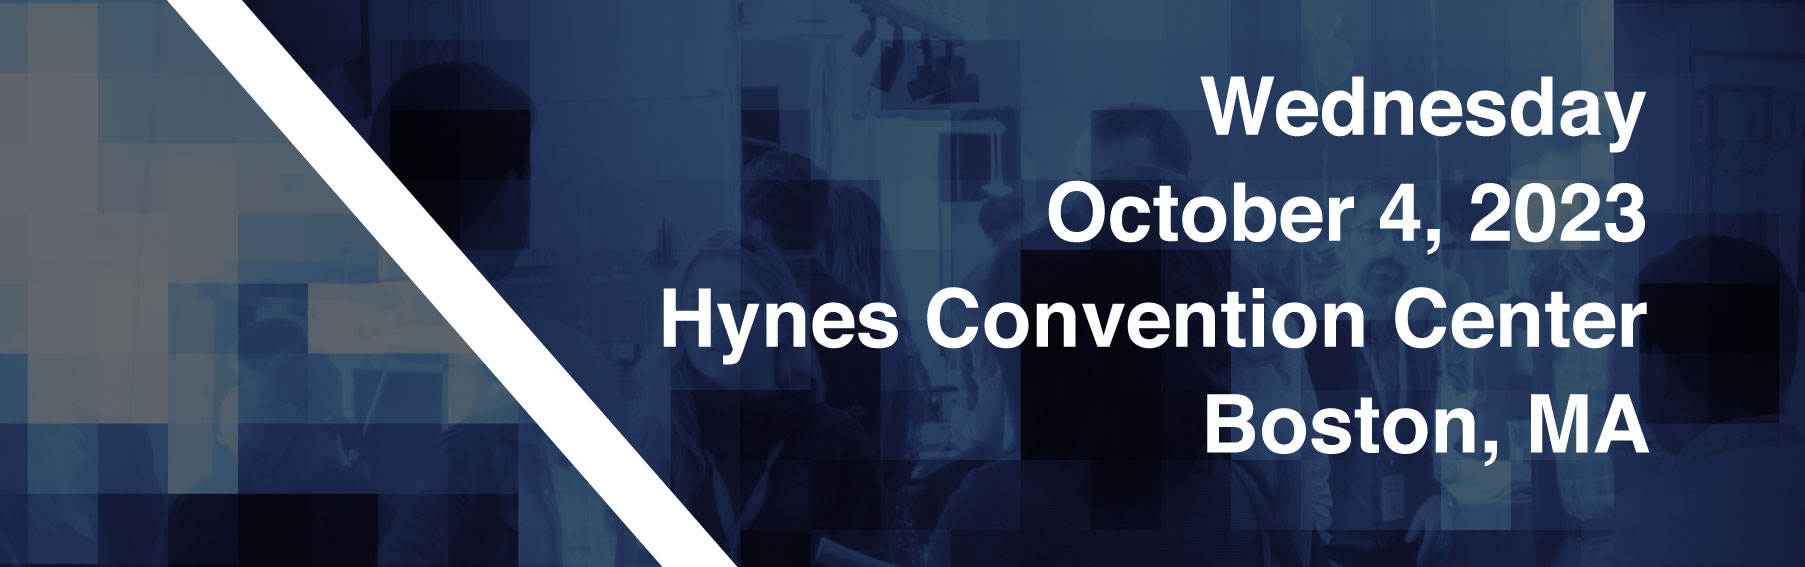 Boston Lights , Wednesday October 4, 2023, Hynes Convention Center. Boston, MA